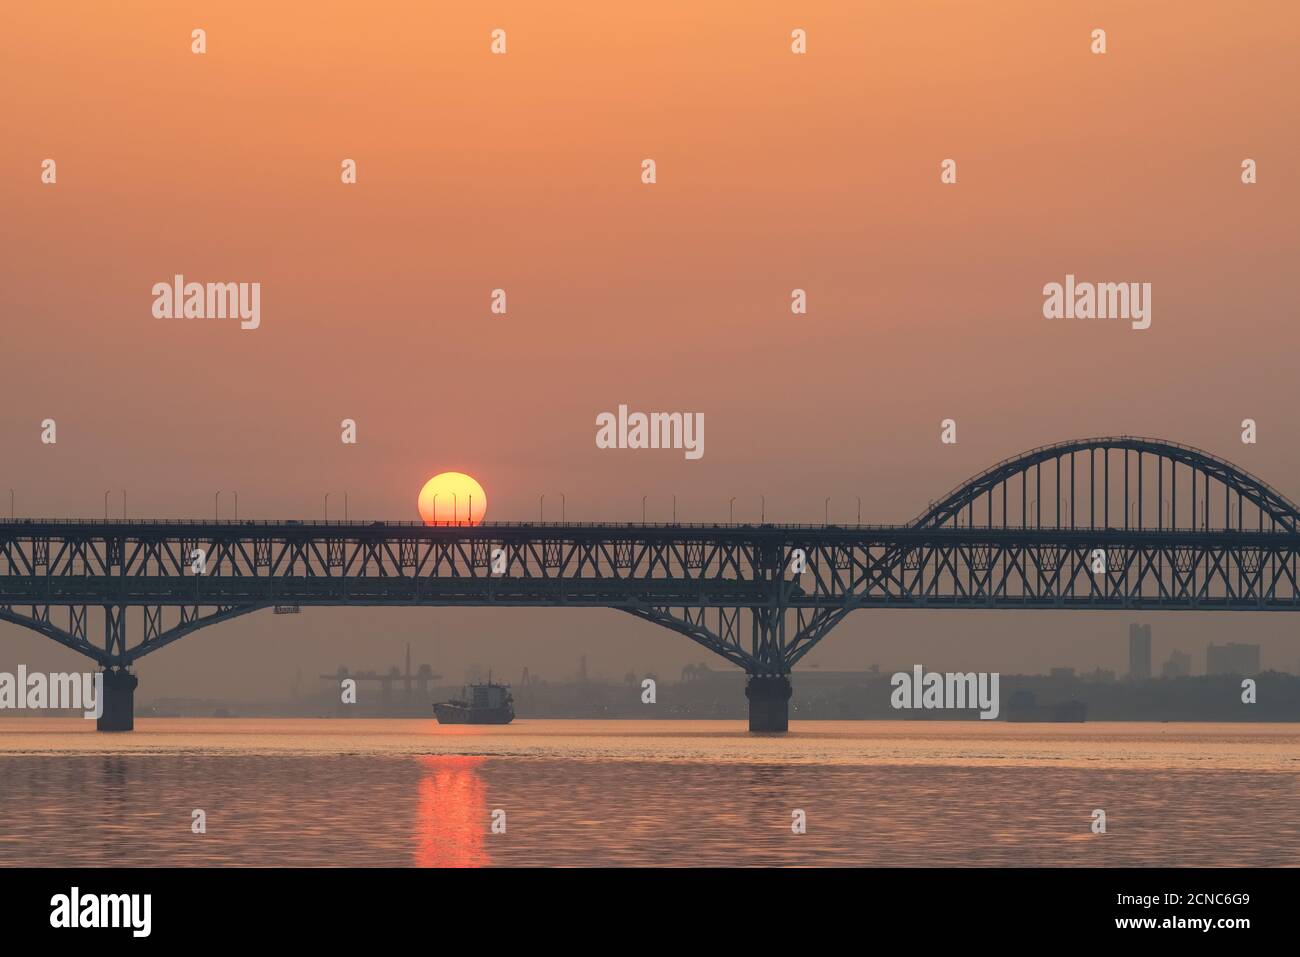 railway and highway combined bridge in sunrise Stock Photo